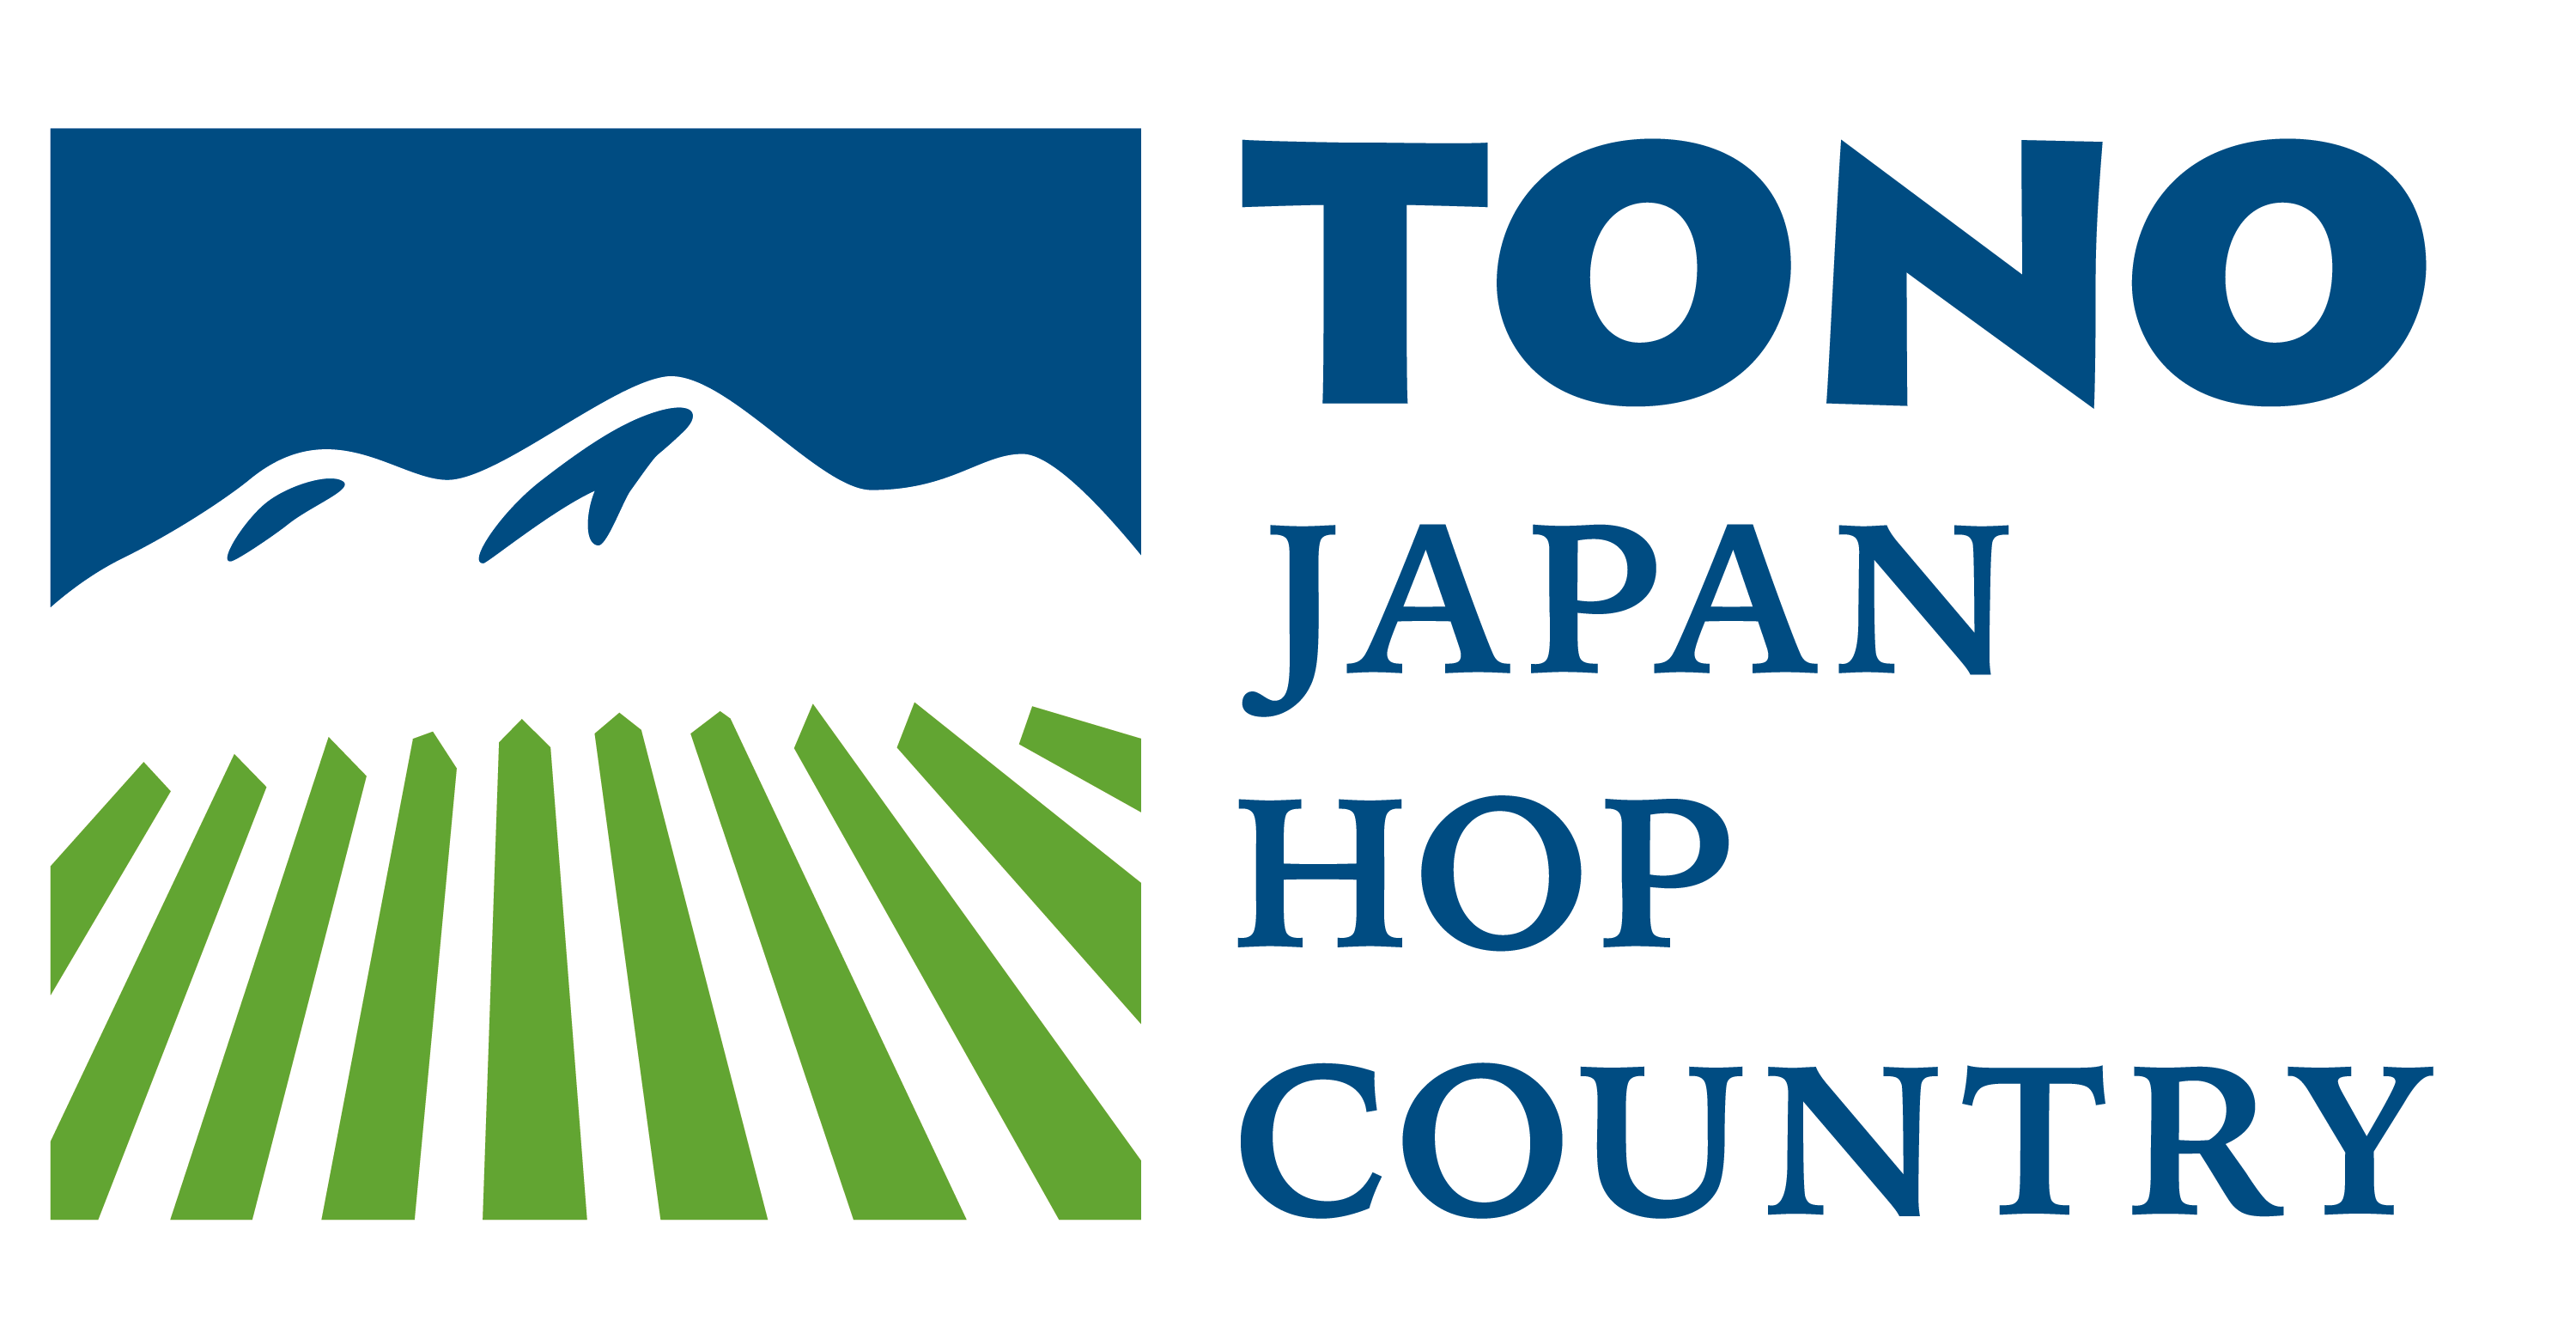 TONO JAPAN HOP COUNTRY